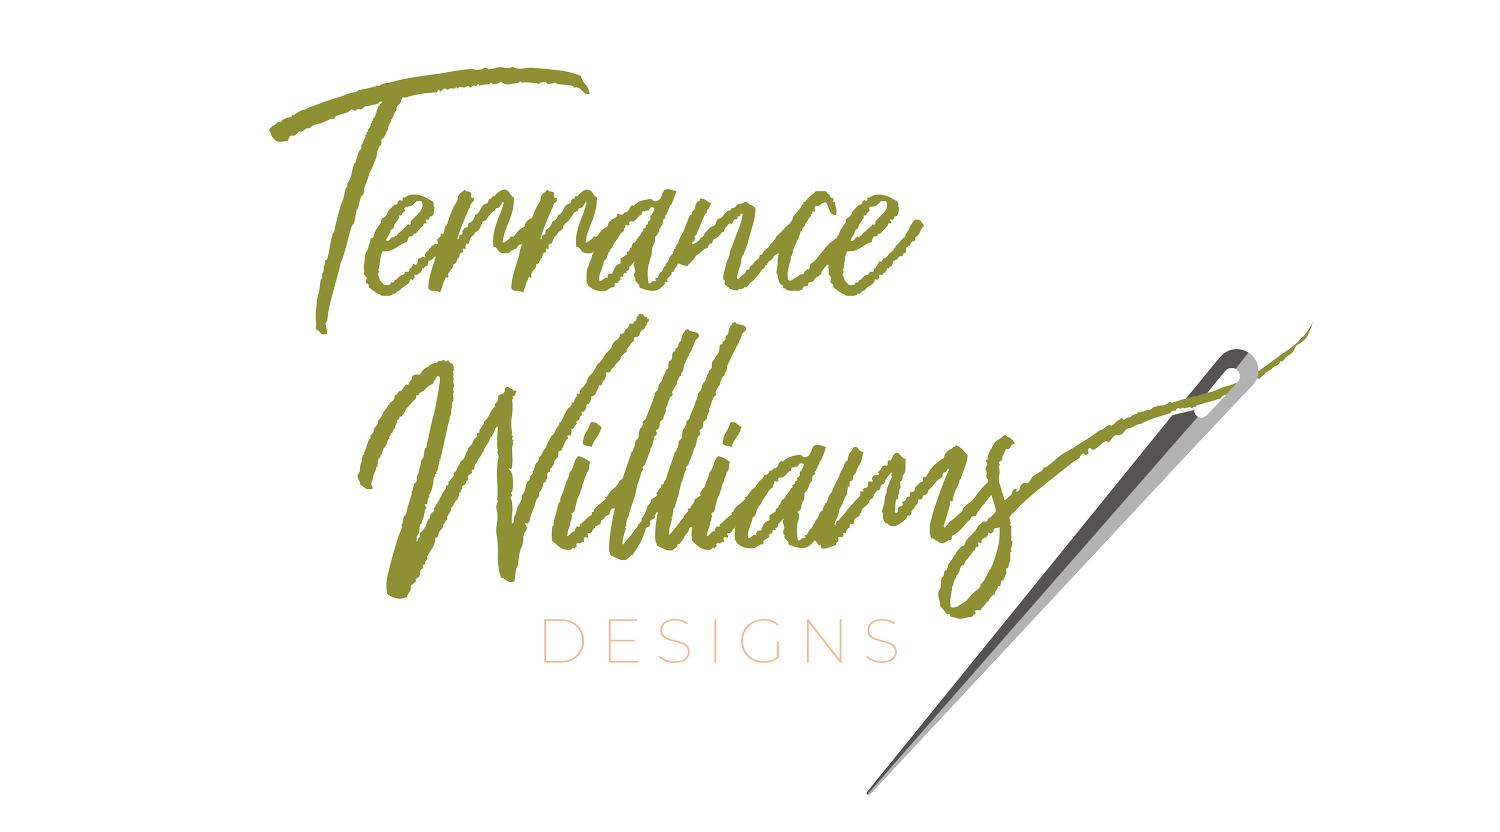 Terrance Williams Designs